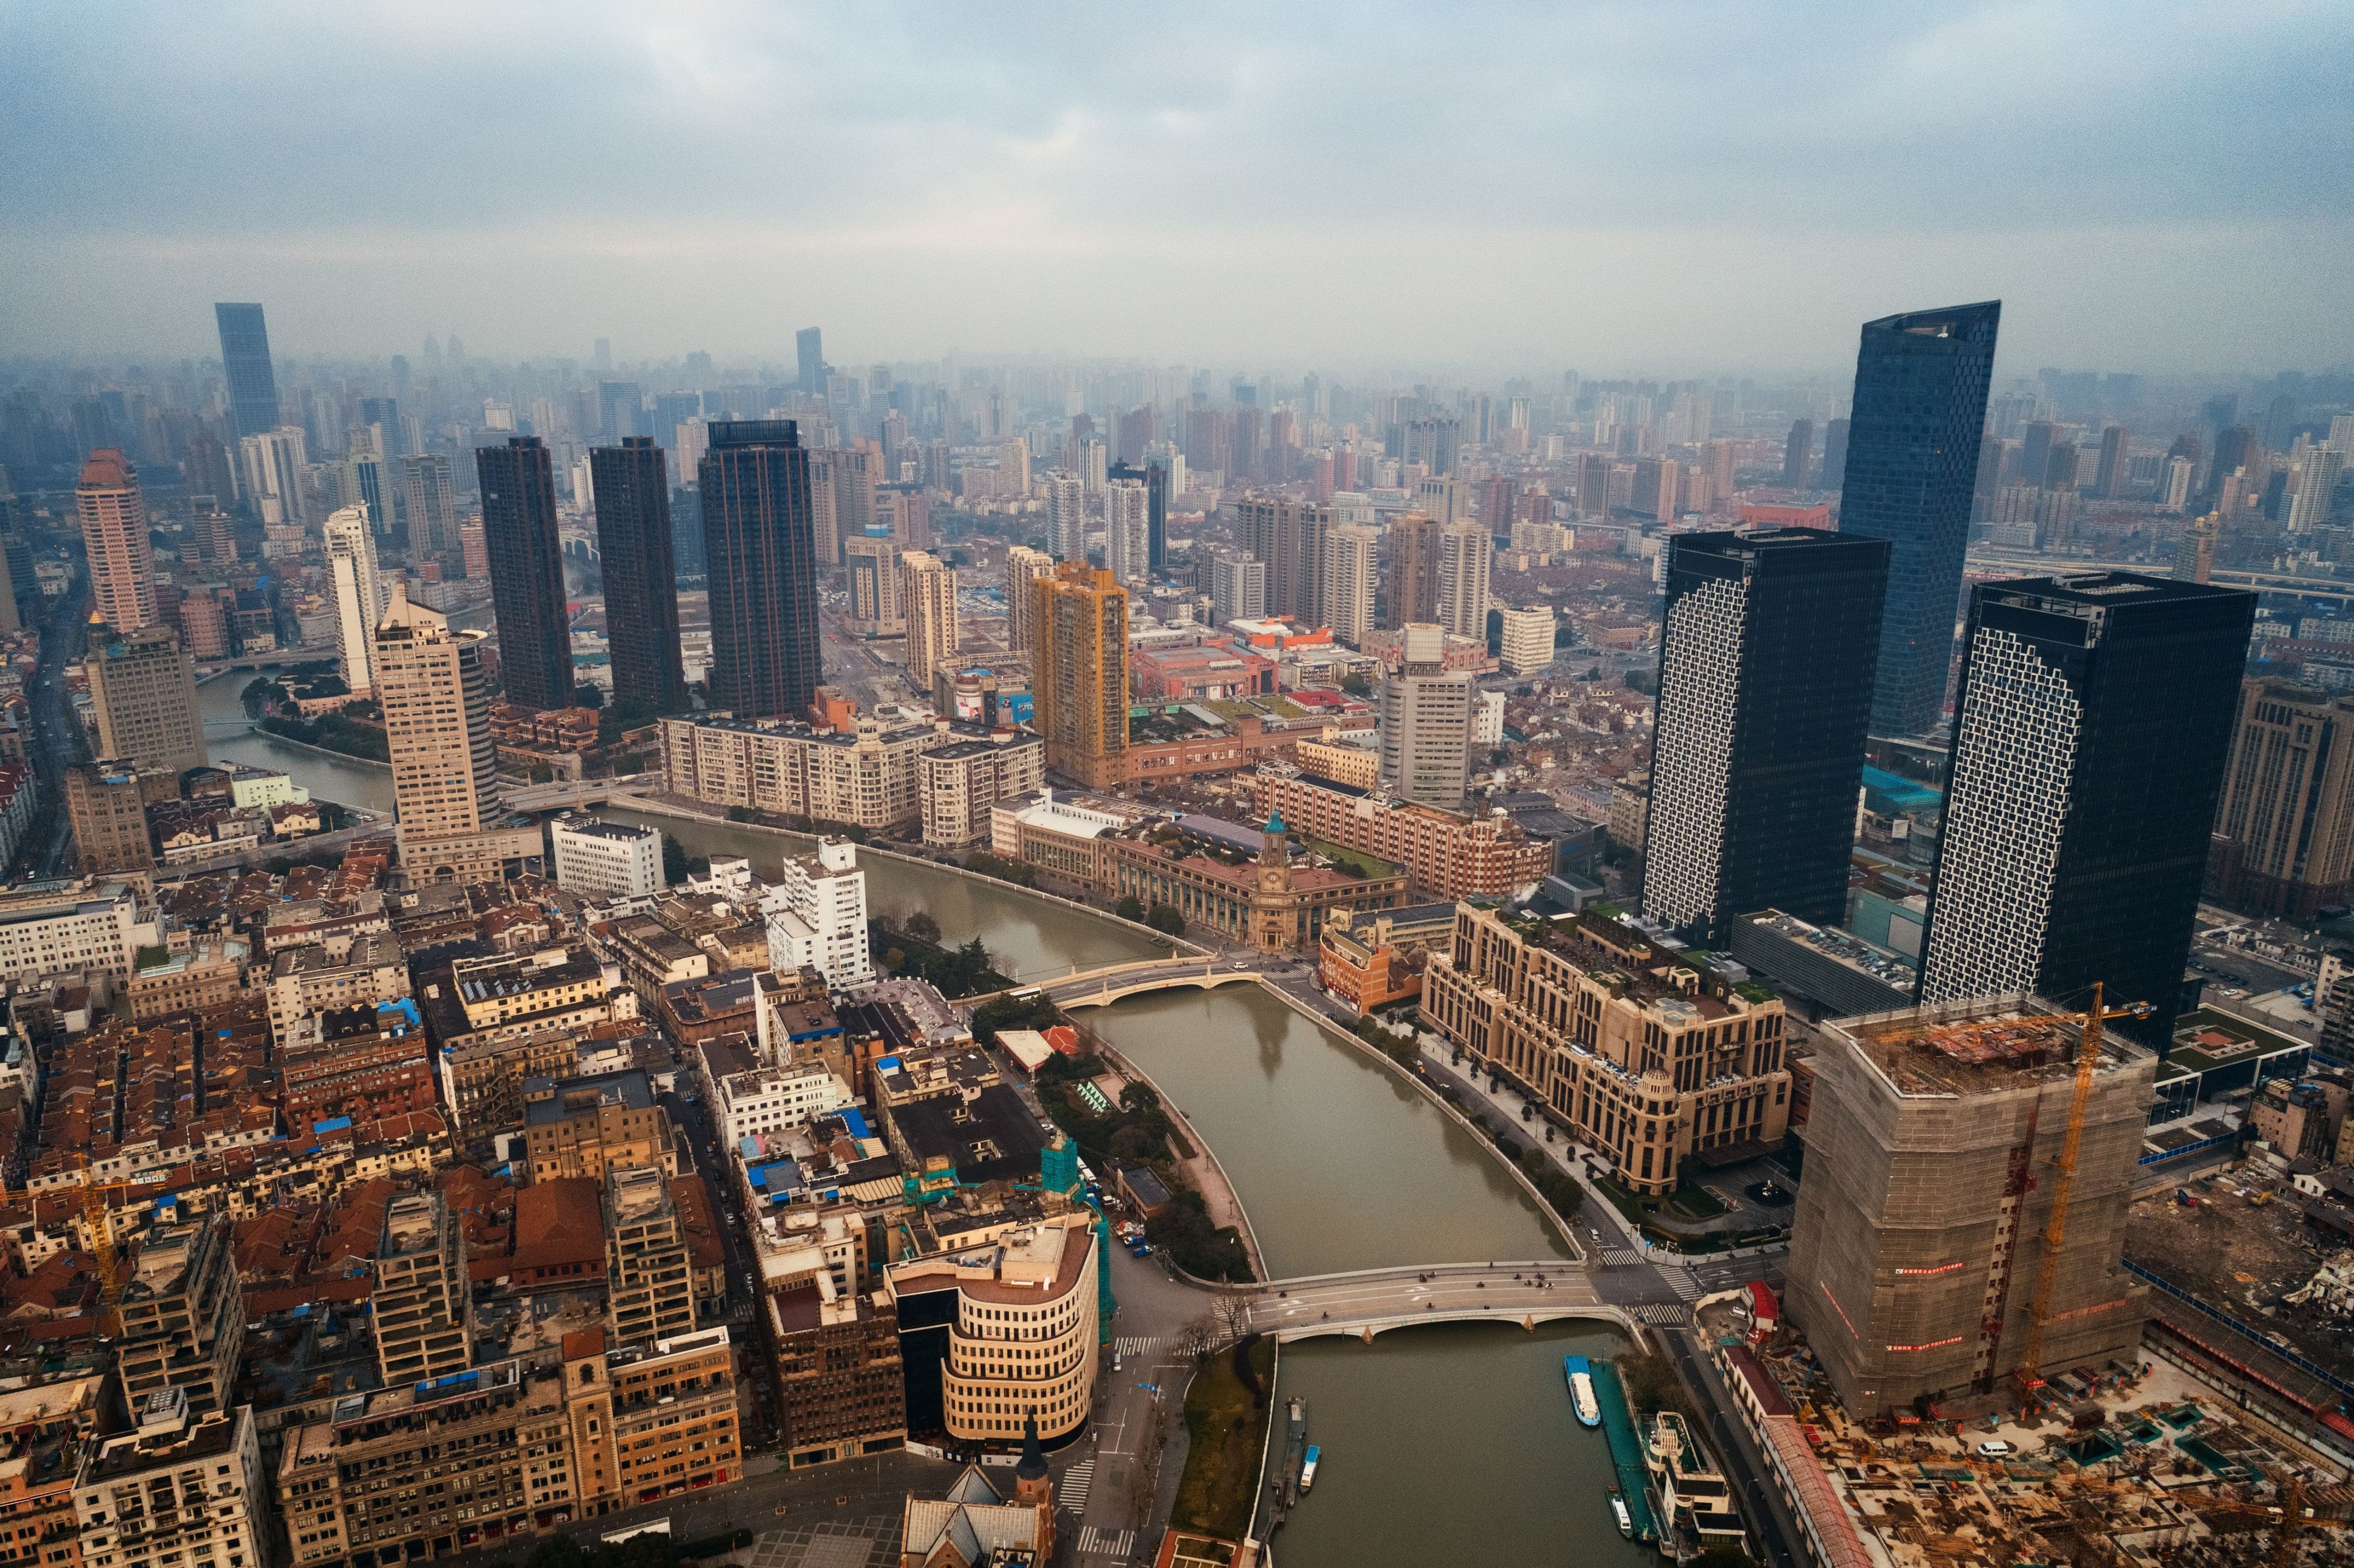 Suzhou Creek wends its way through the heart of Shanghai. Photo: Shutterstock